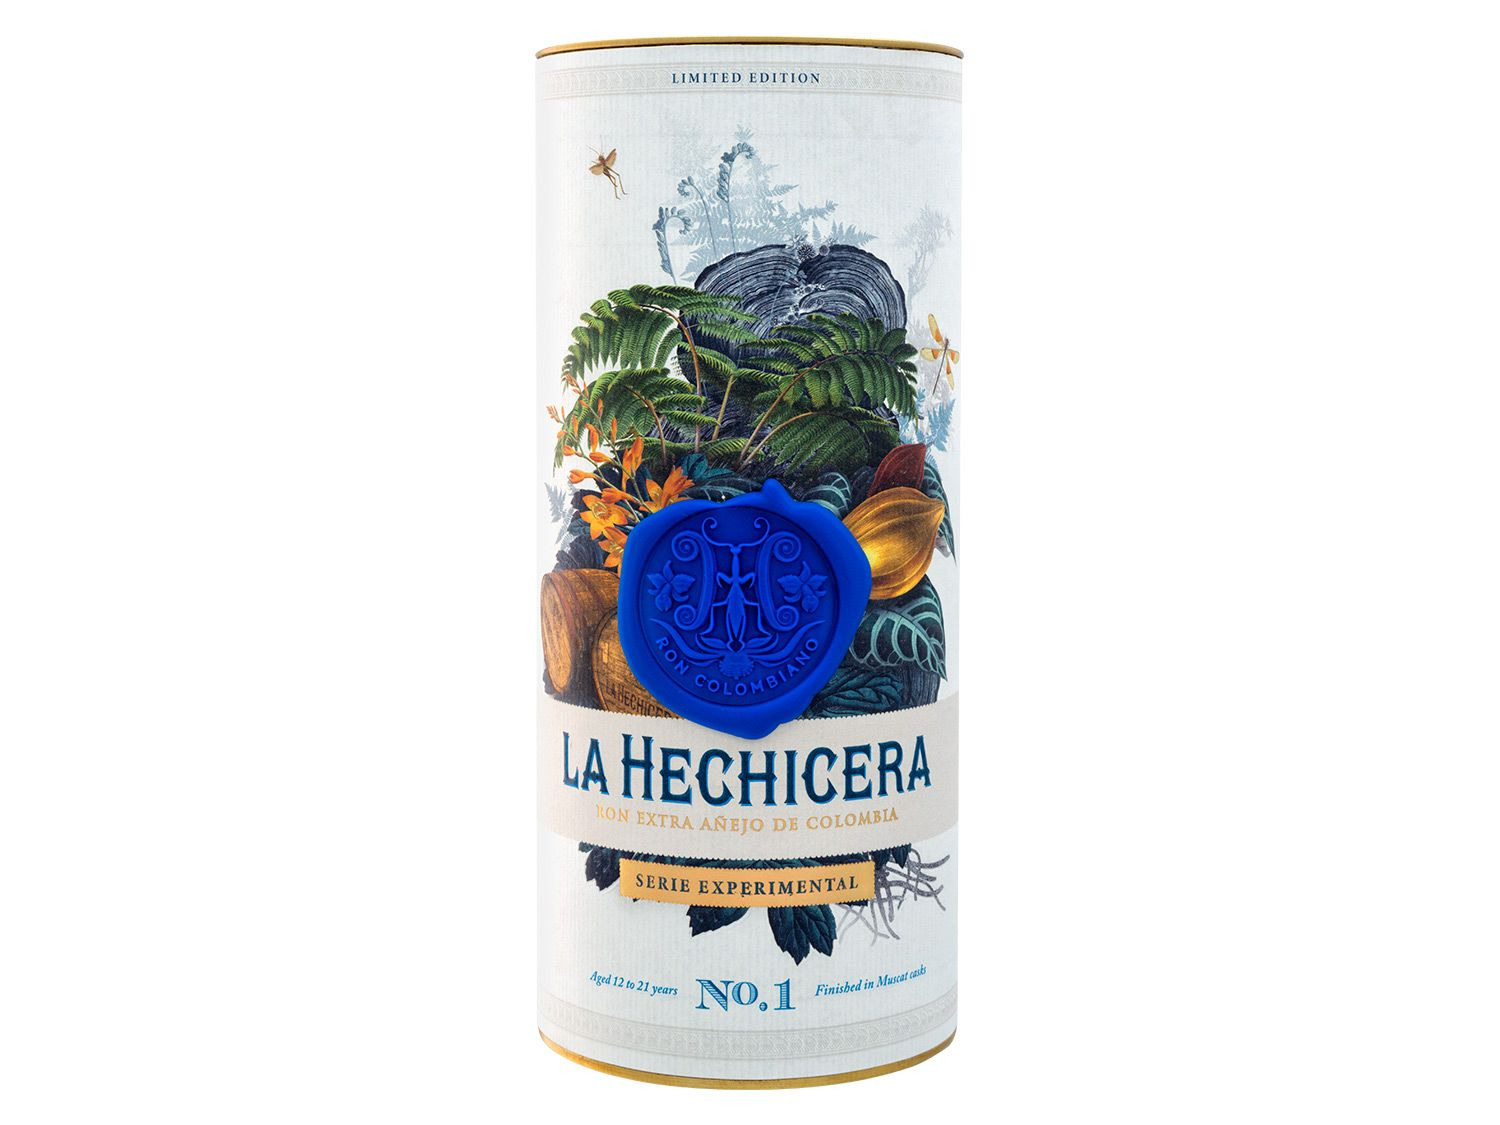 La Hechicera mit No. 1 Rum Experimental Geschenk… Serie